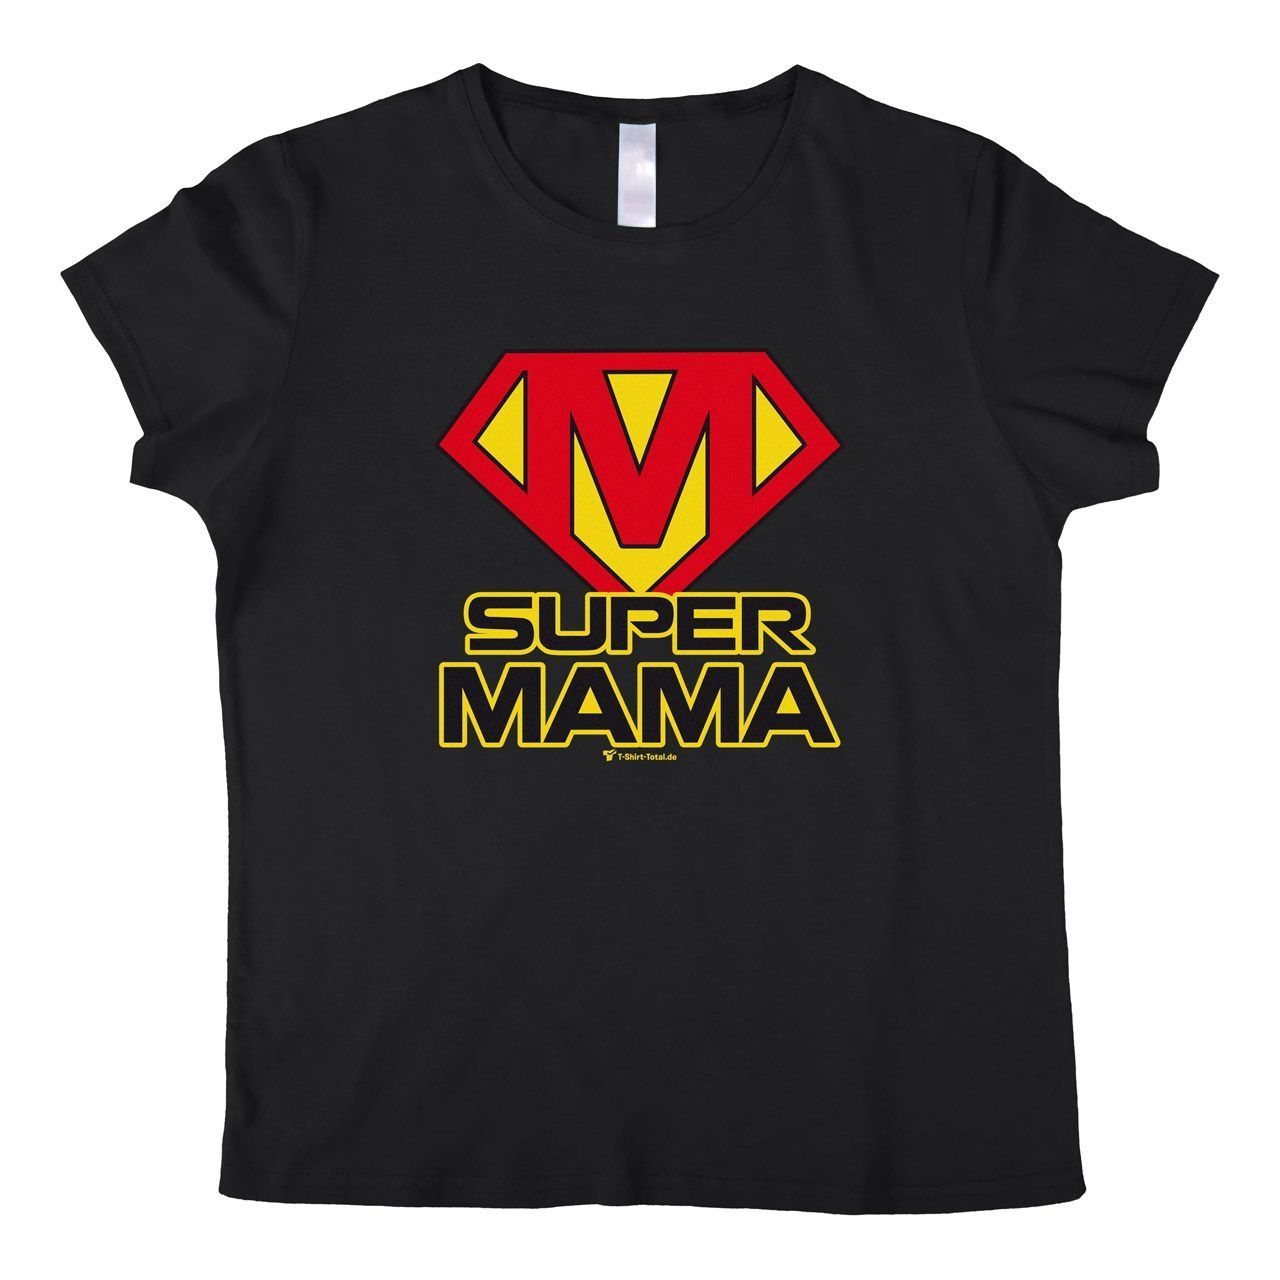 Super Mama Woman T-Shirt schwarz 2-Extra Large